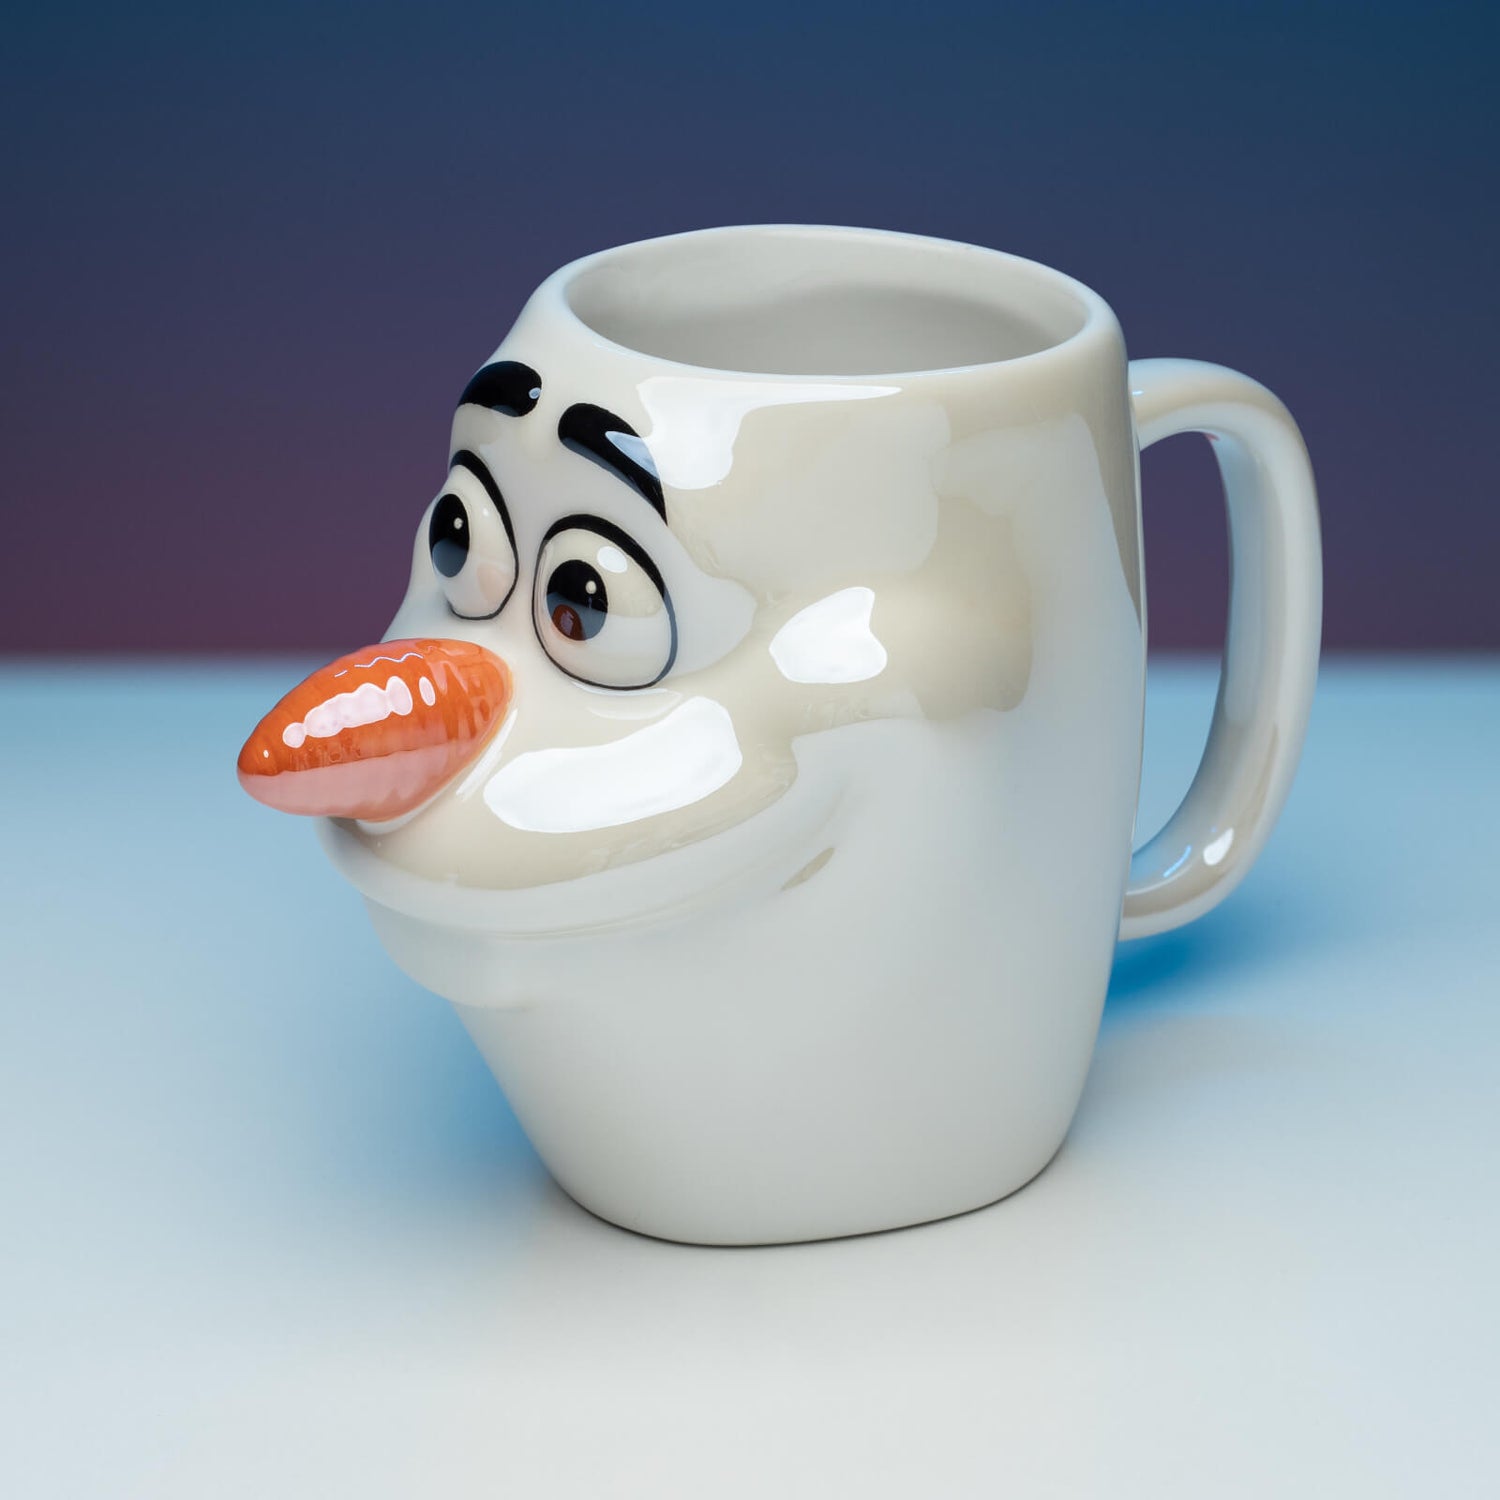 Disney Frozen Olaf Shaped Mug